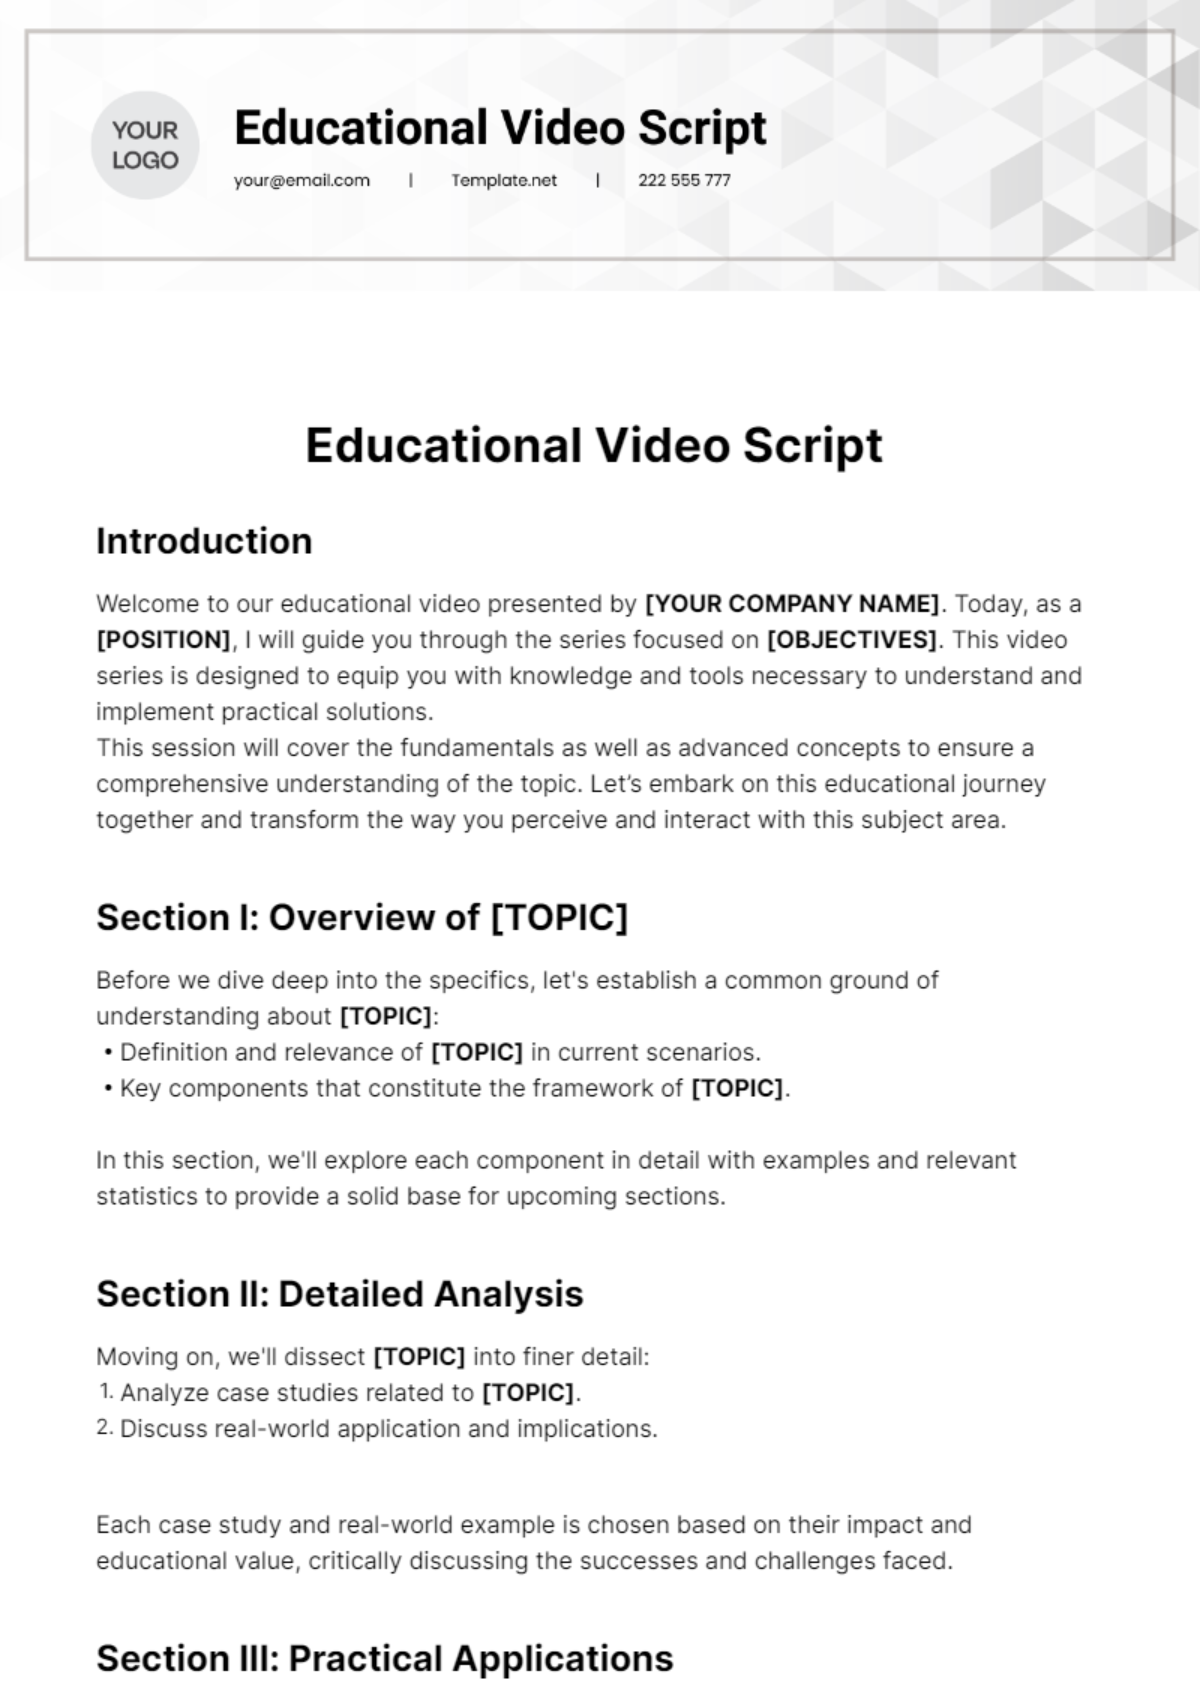 Educational Video Script Template